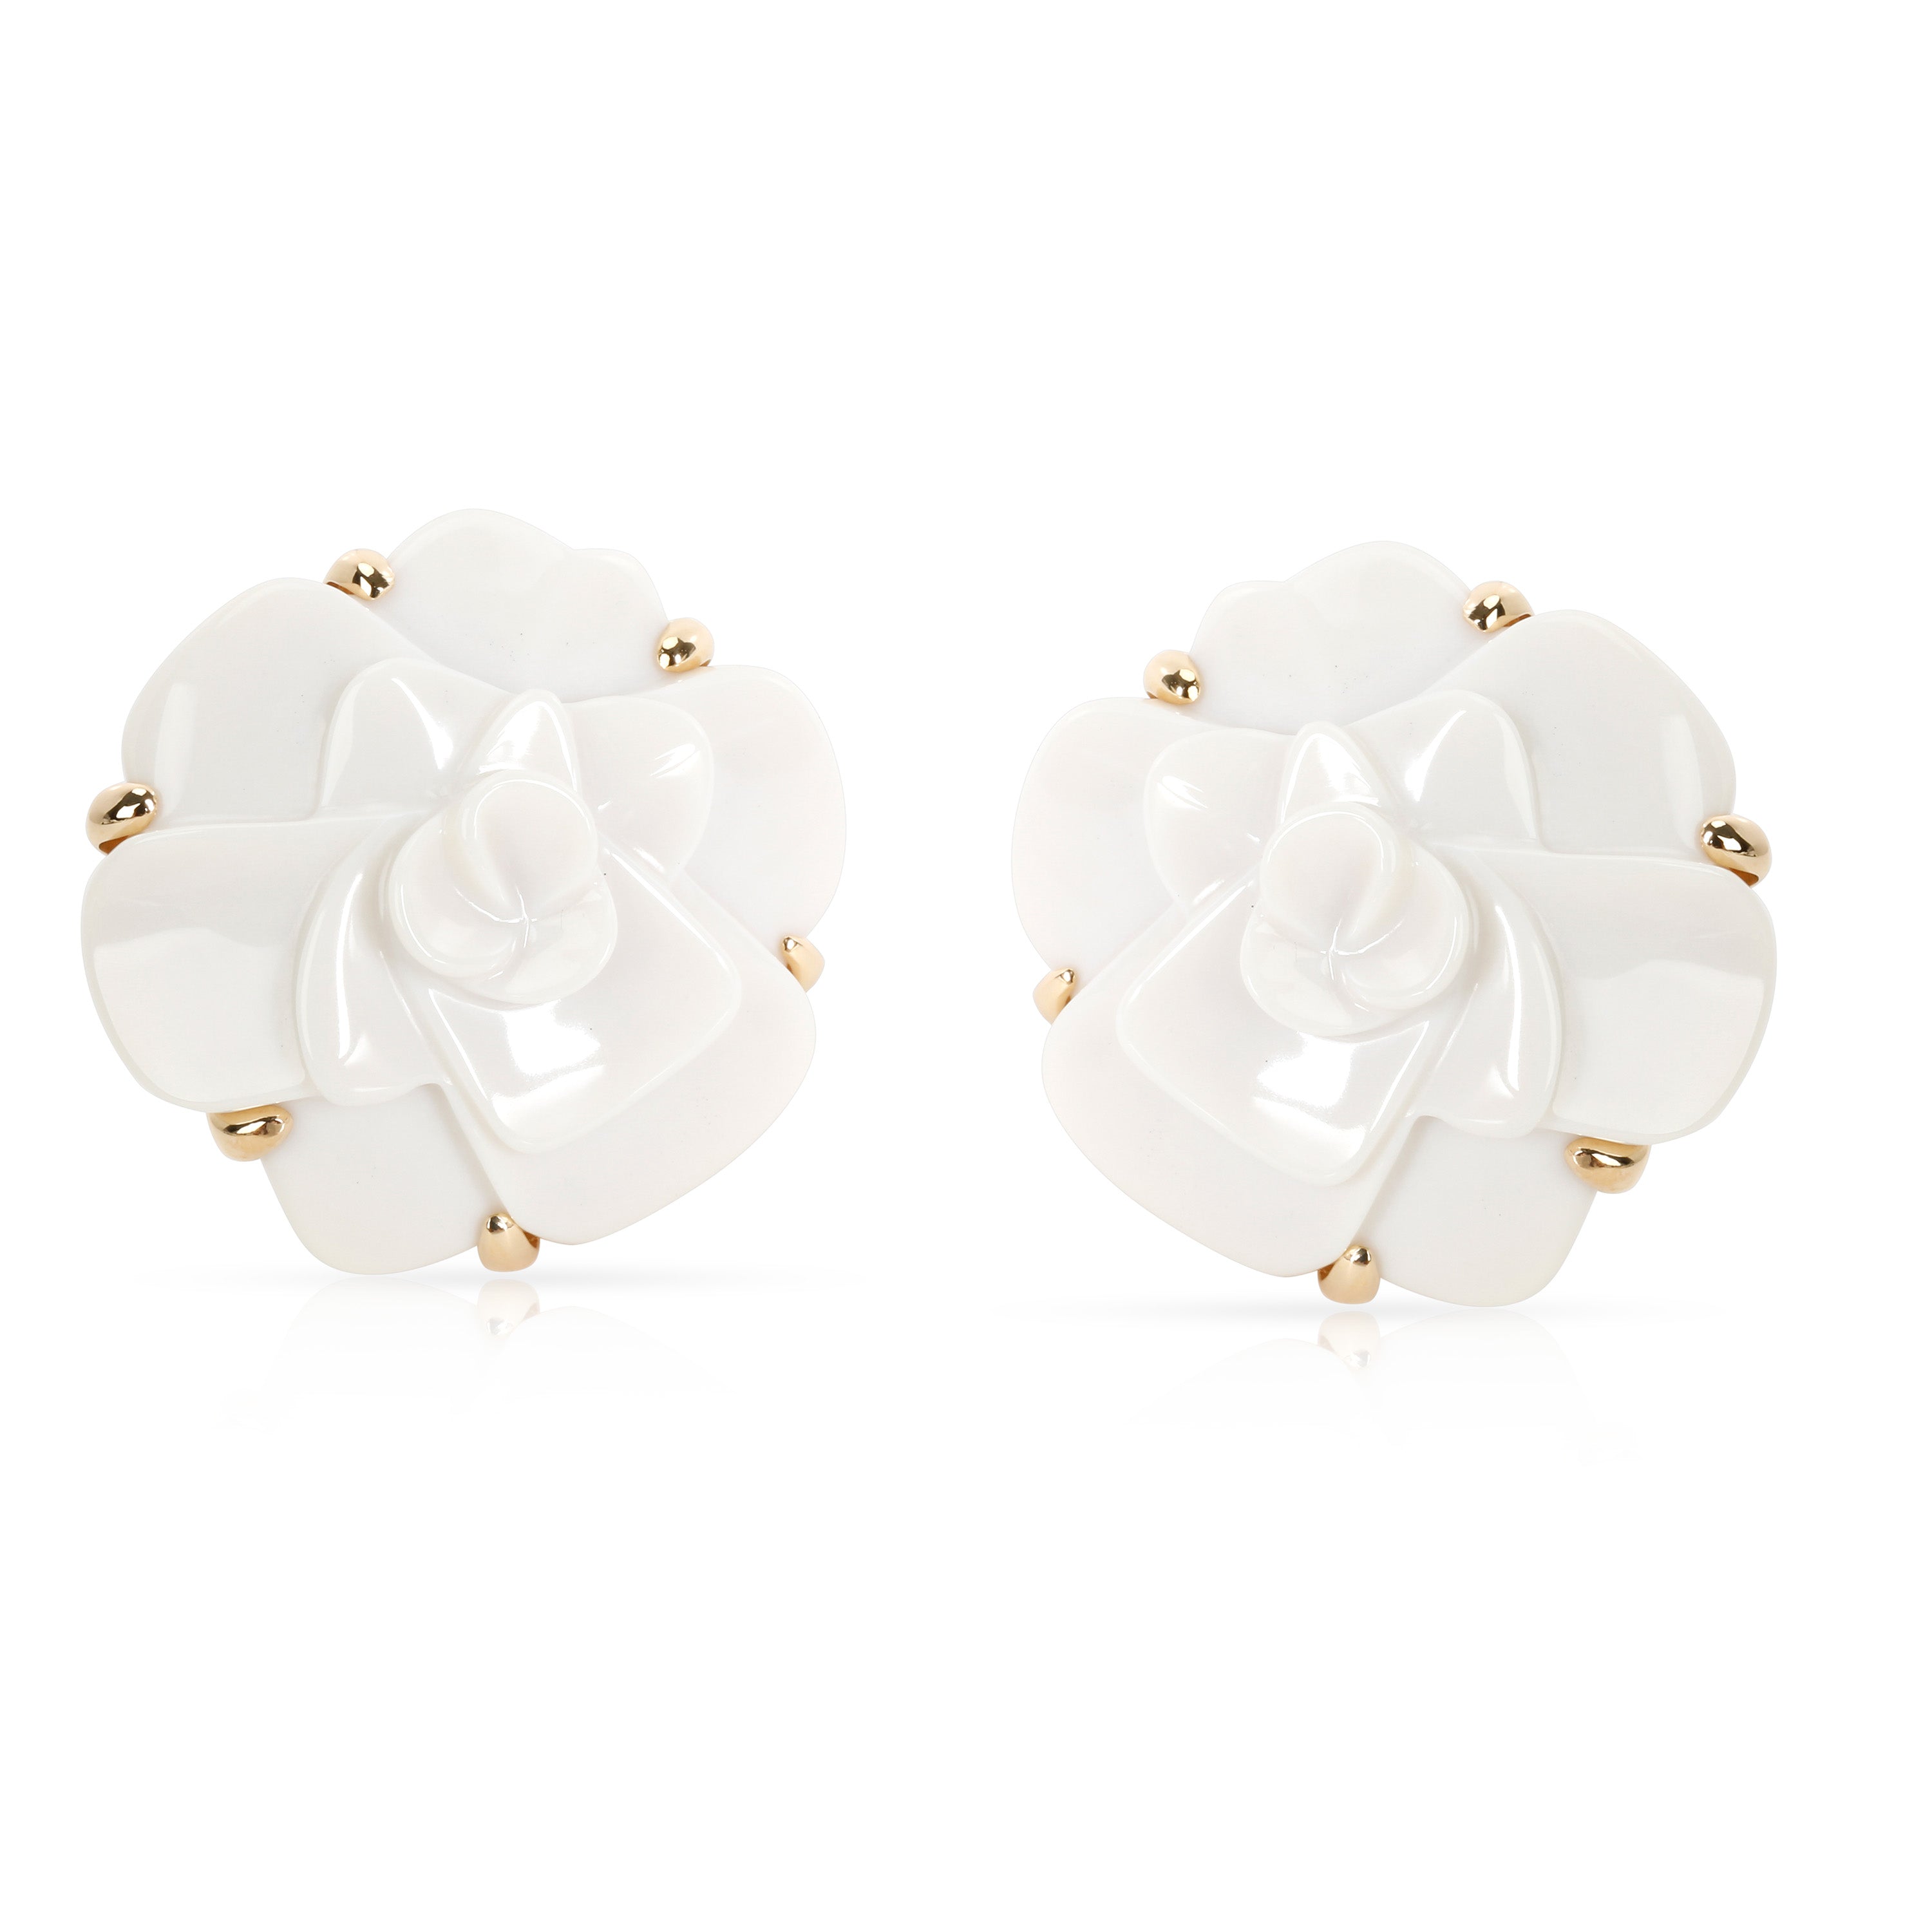 Chanel Camellia White Agate Flower Earrings in 18K Yellow Gold